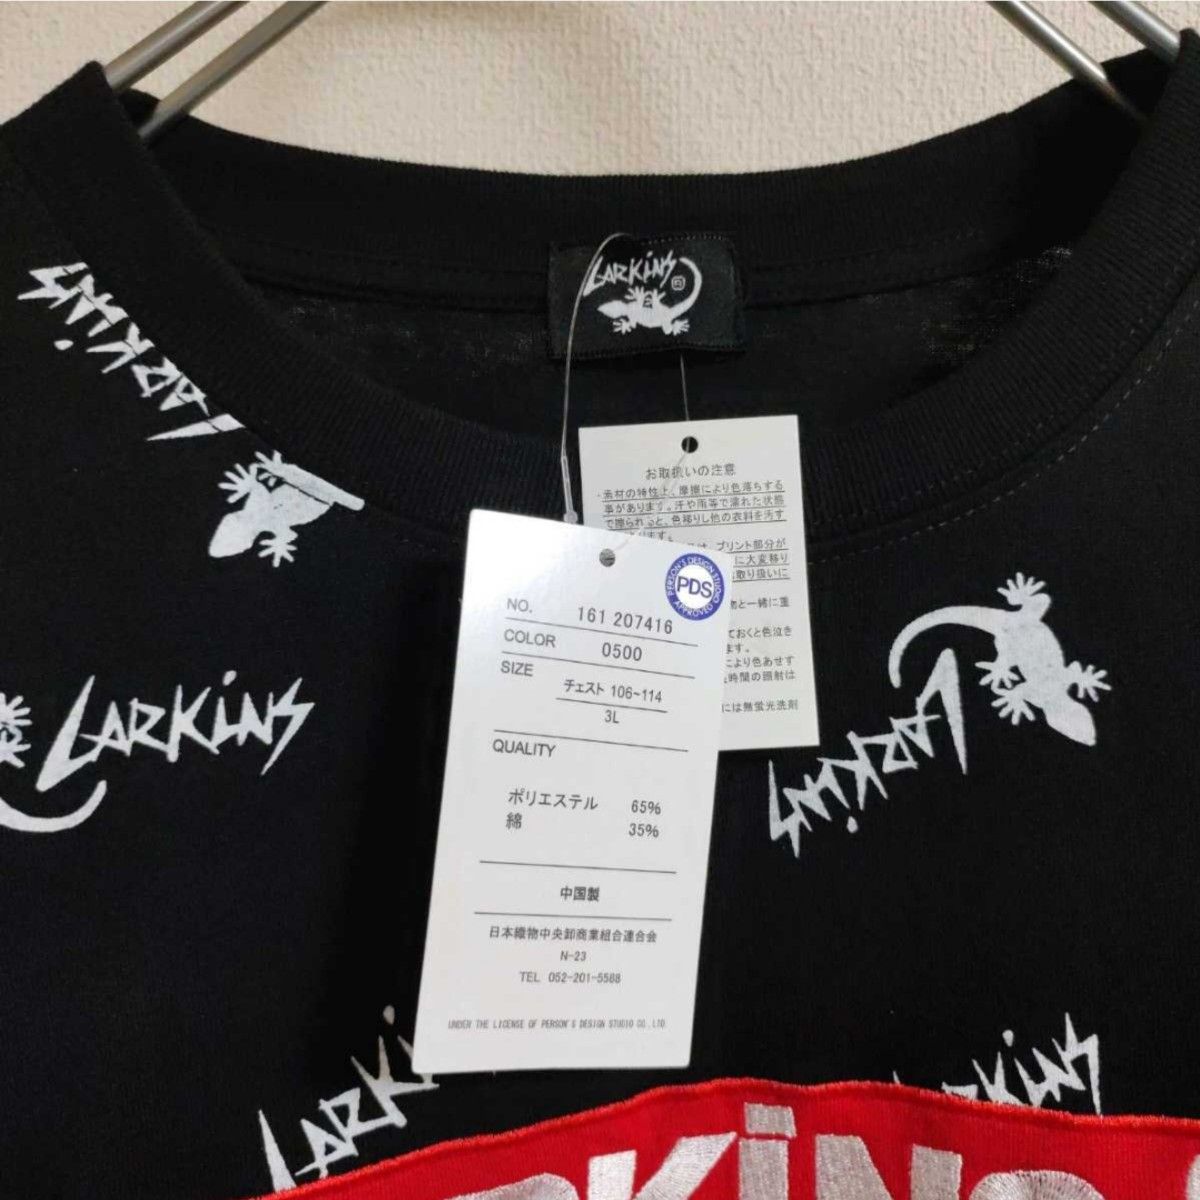 LARKiNS Tシャツ 3Lサイズ 新品未使用 ラーキンス スケボー